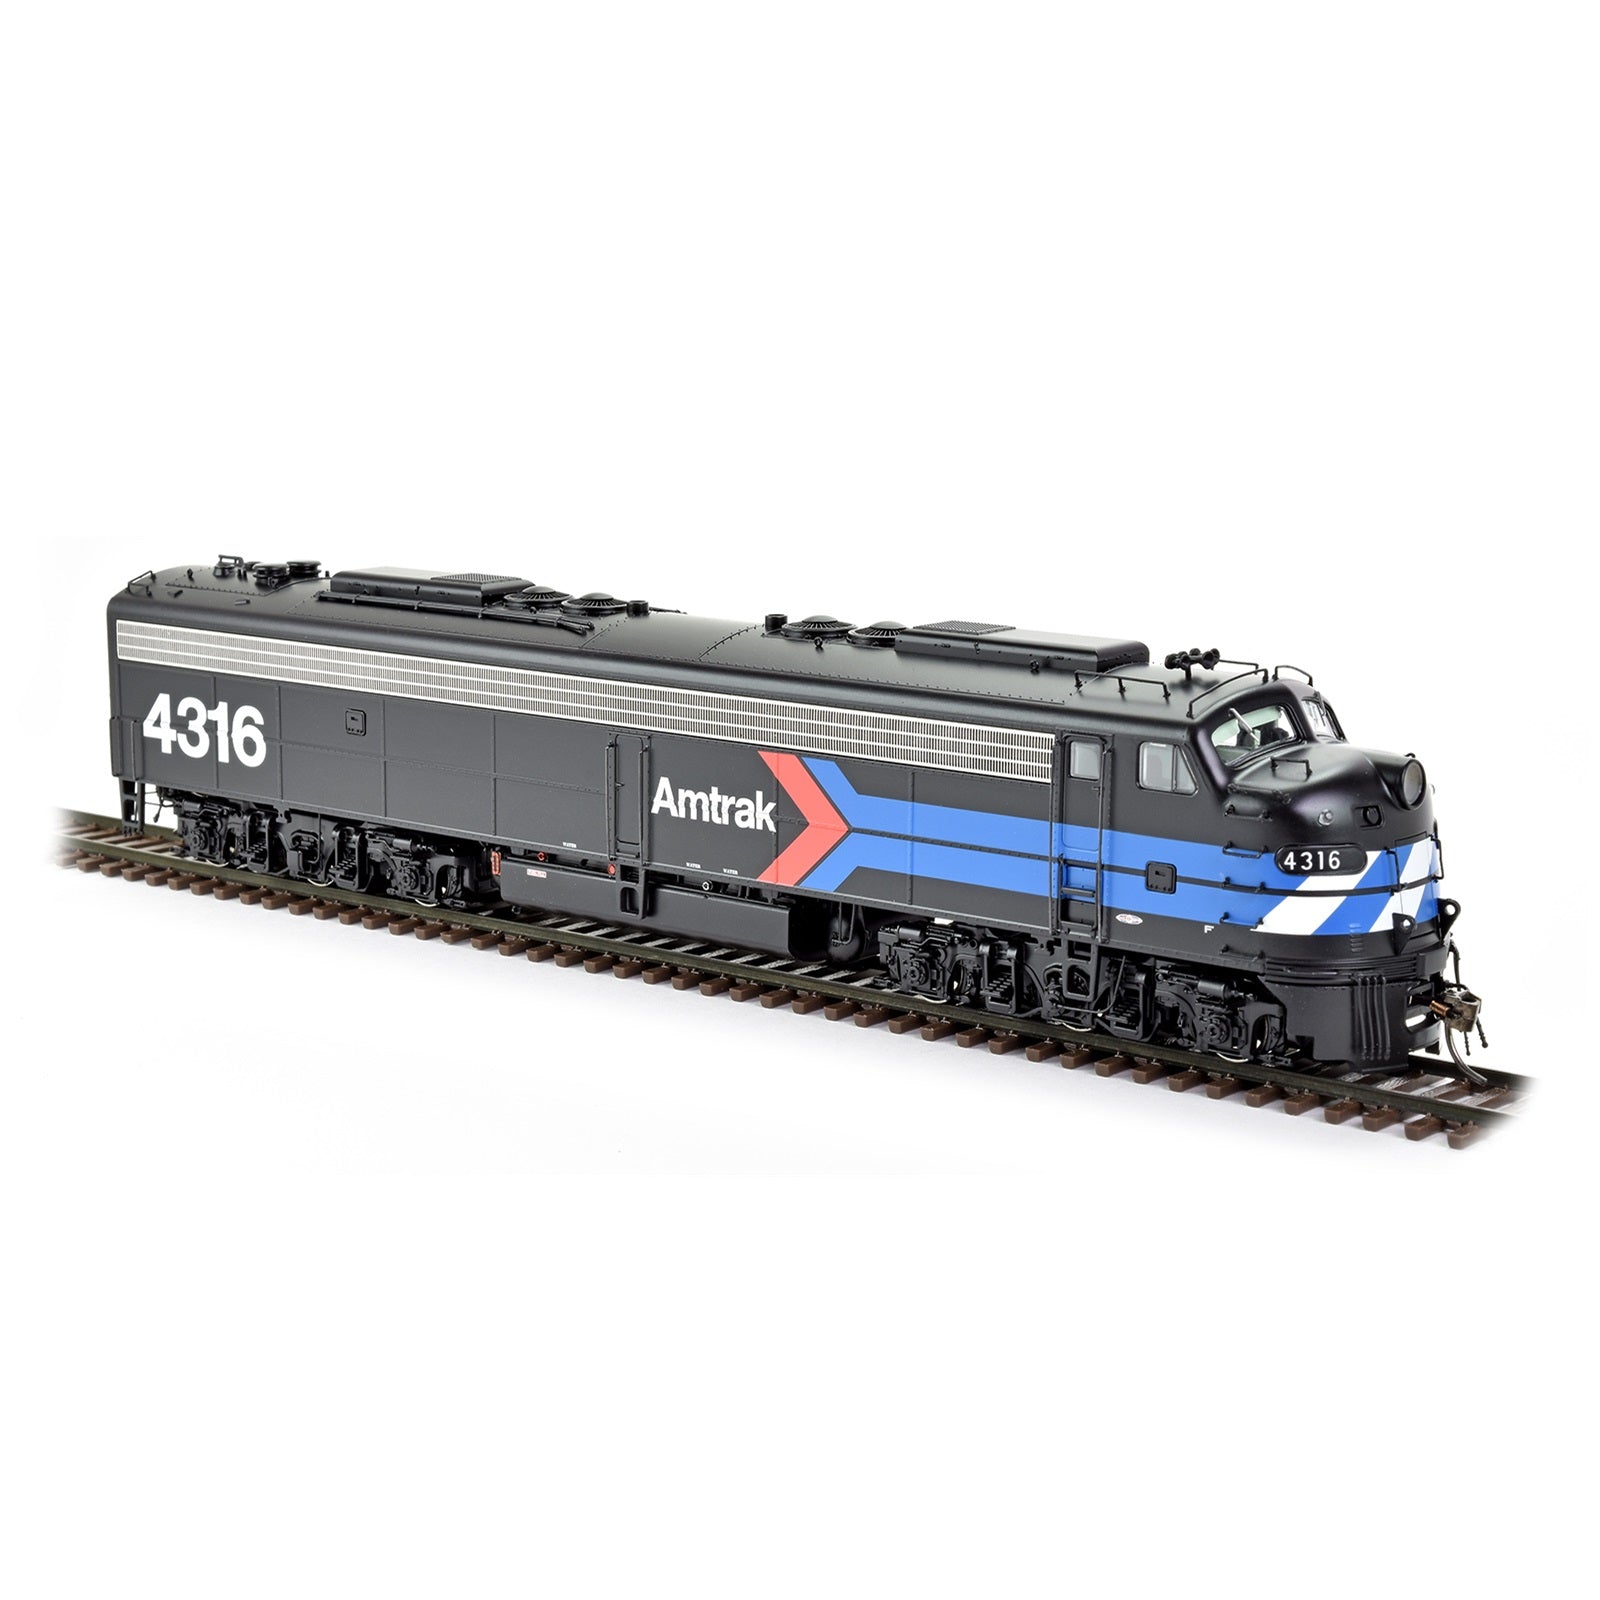 Rapido EMD8A Locomotive - Amtrak #4316 (Early Black Scheme), HO Scale